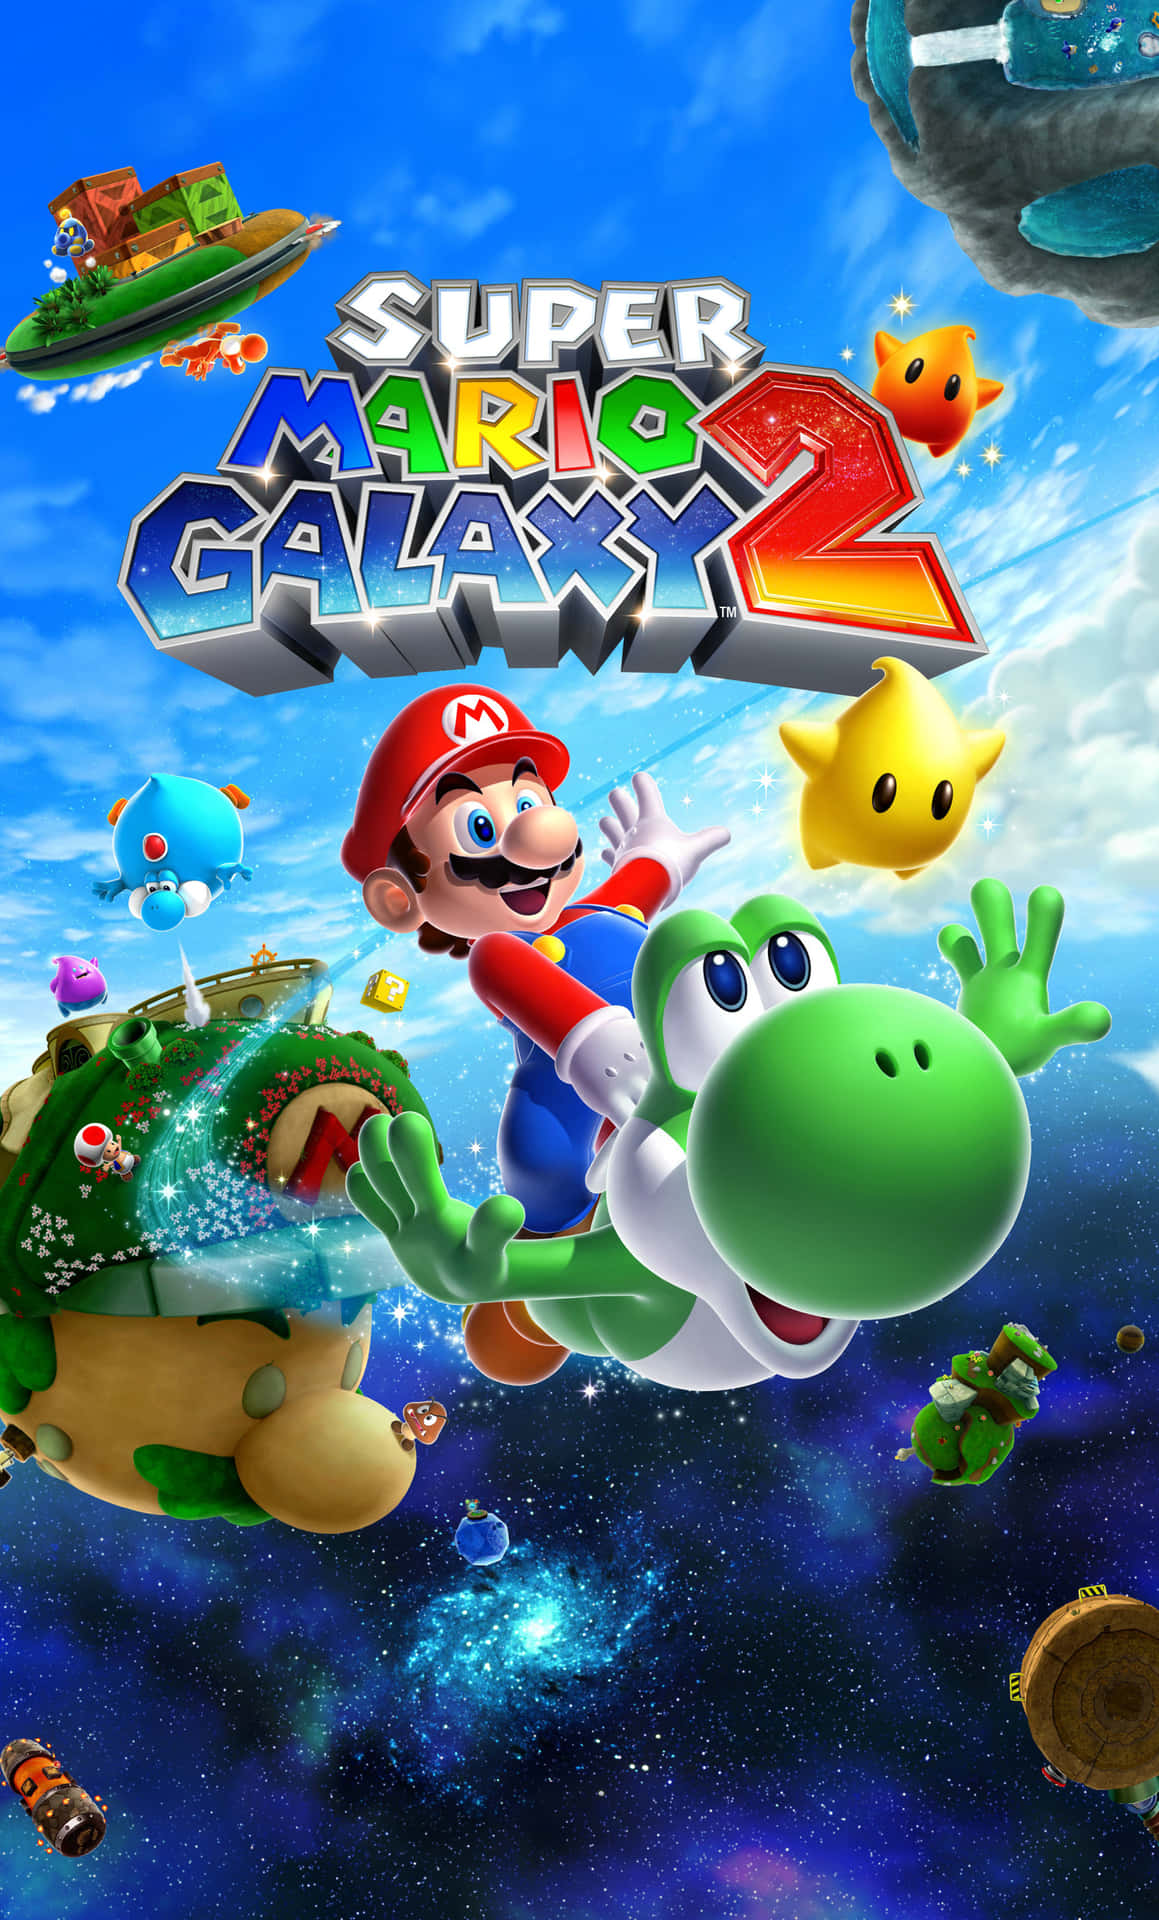 Take Mario to Outer Space in Super Mario Galaxy Wallpaper